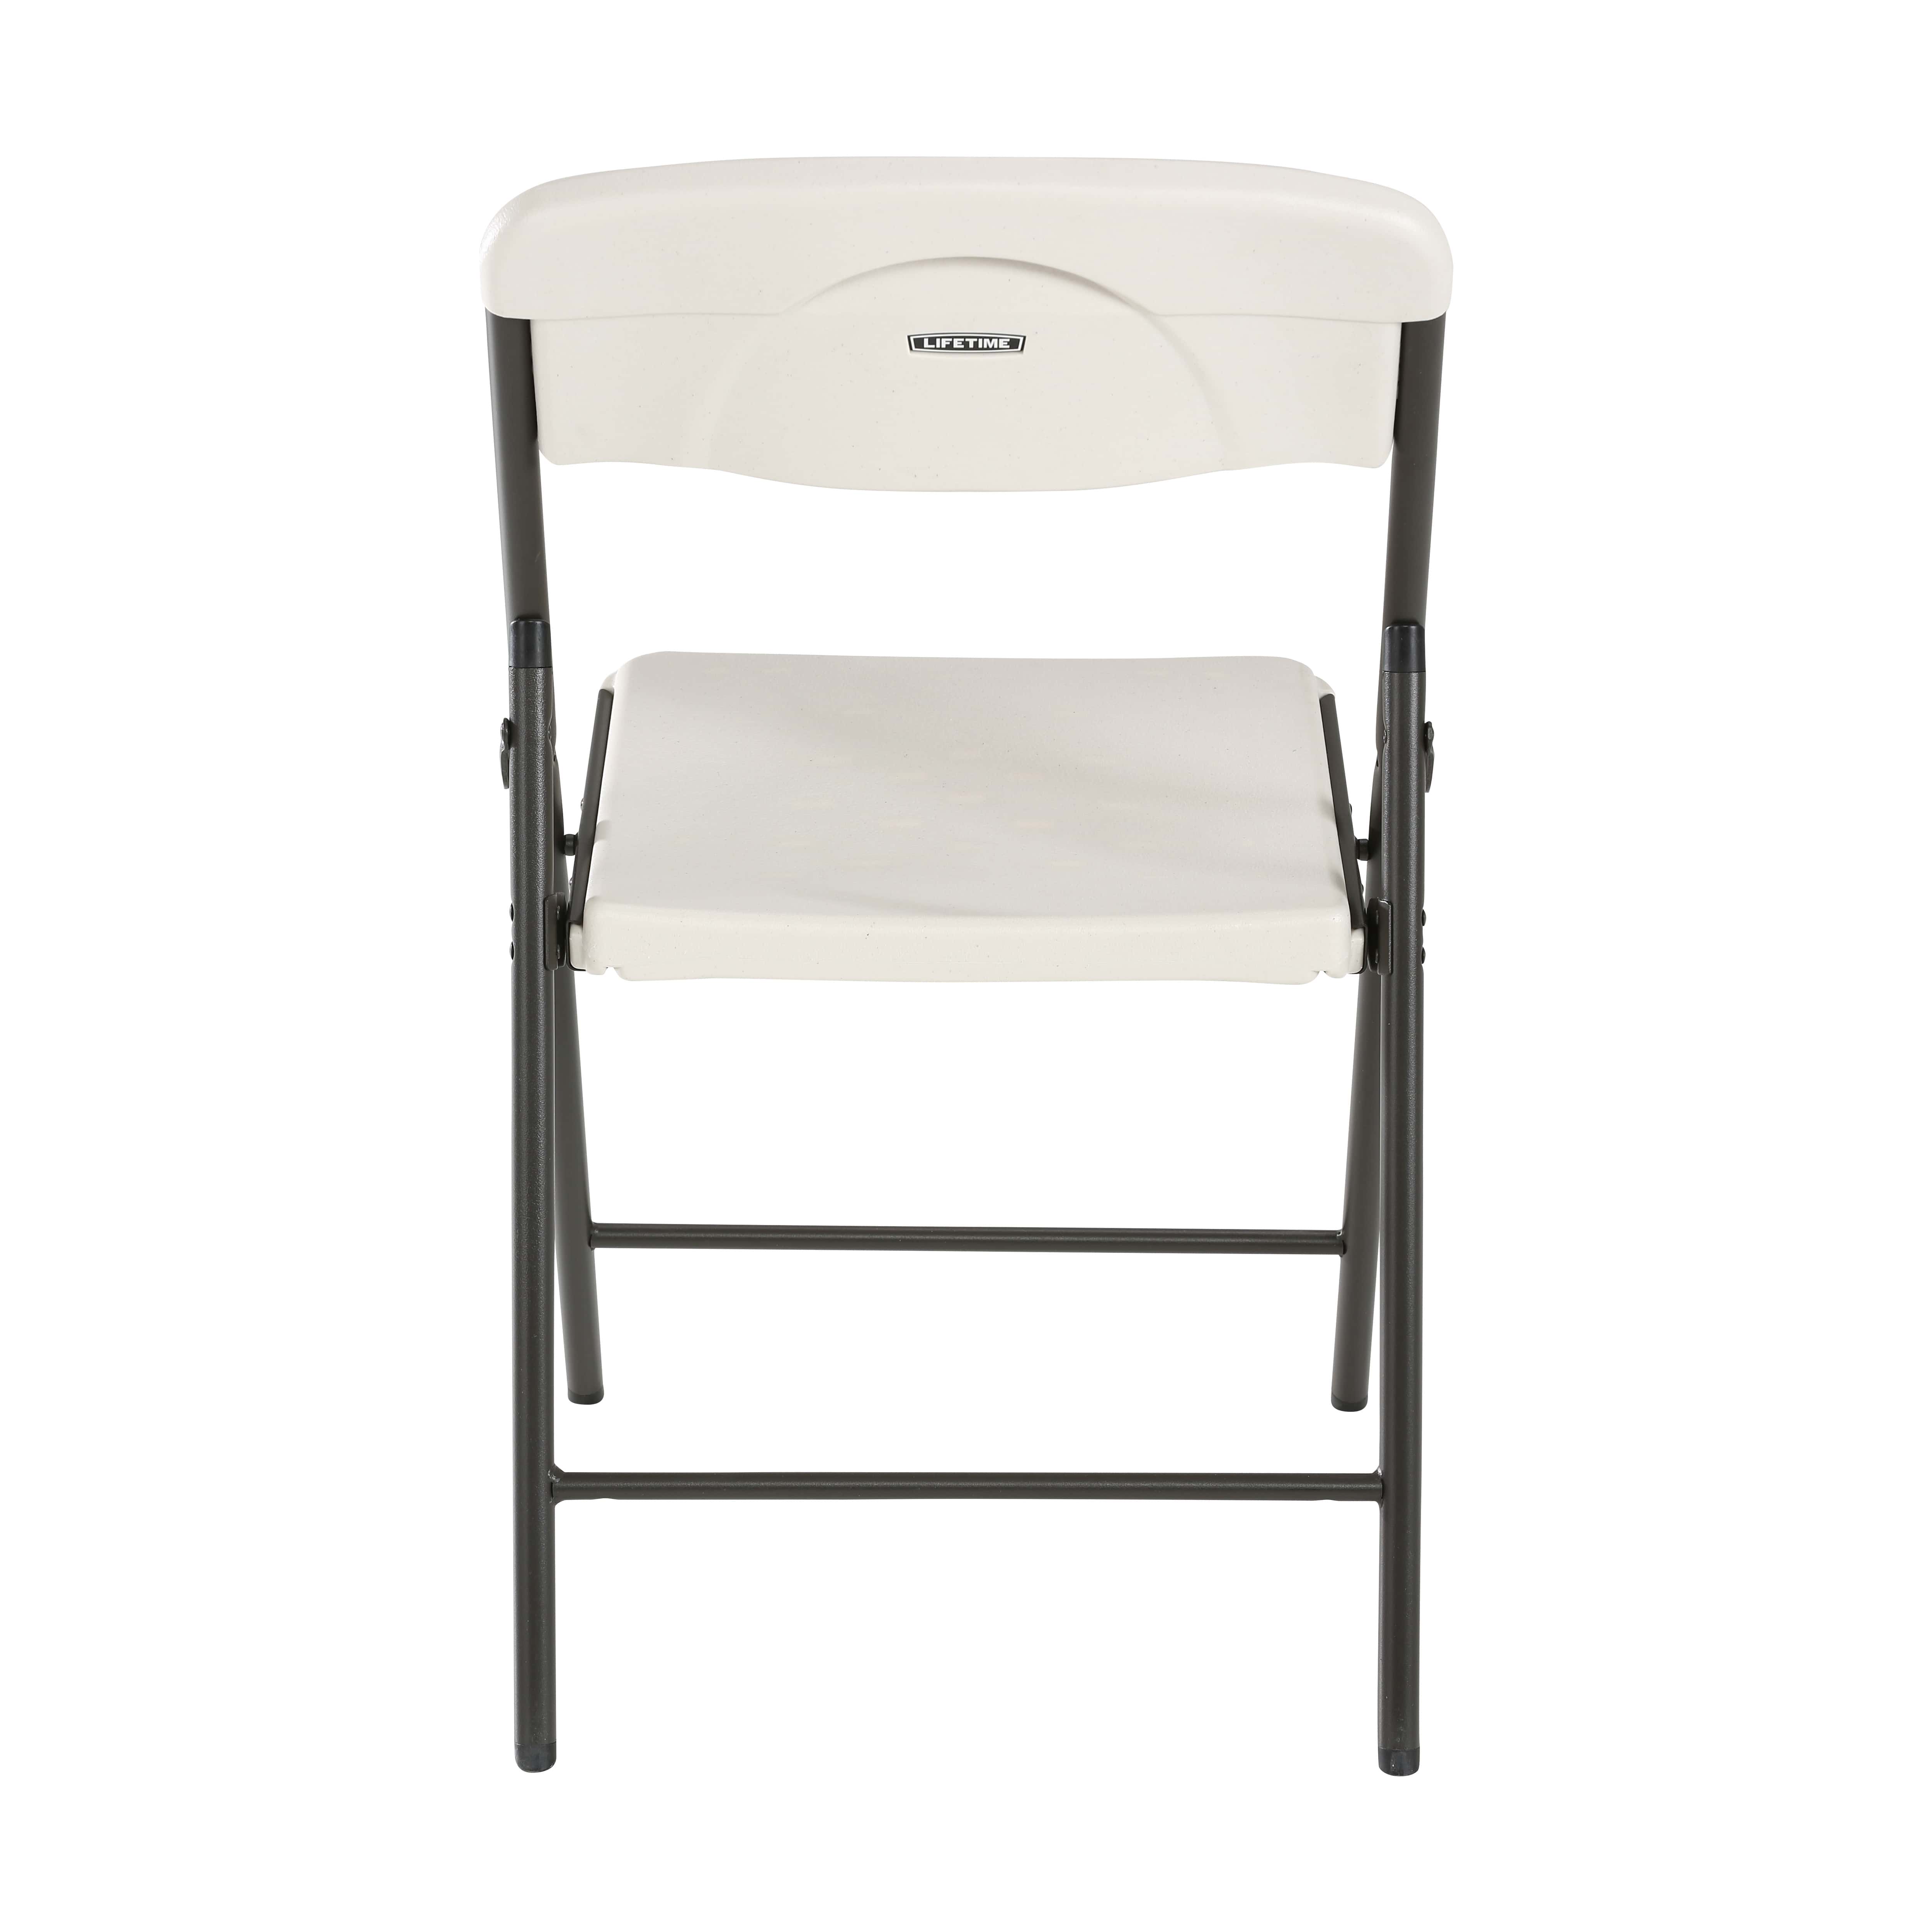 Contemporary folding chair almond